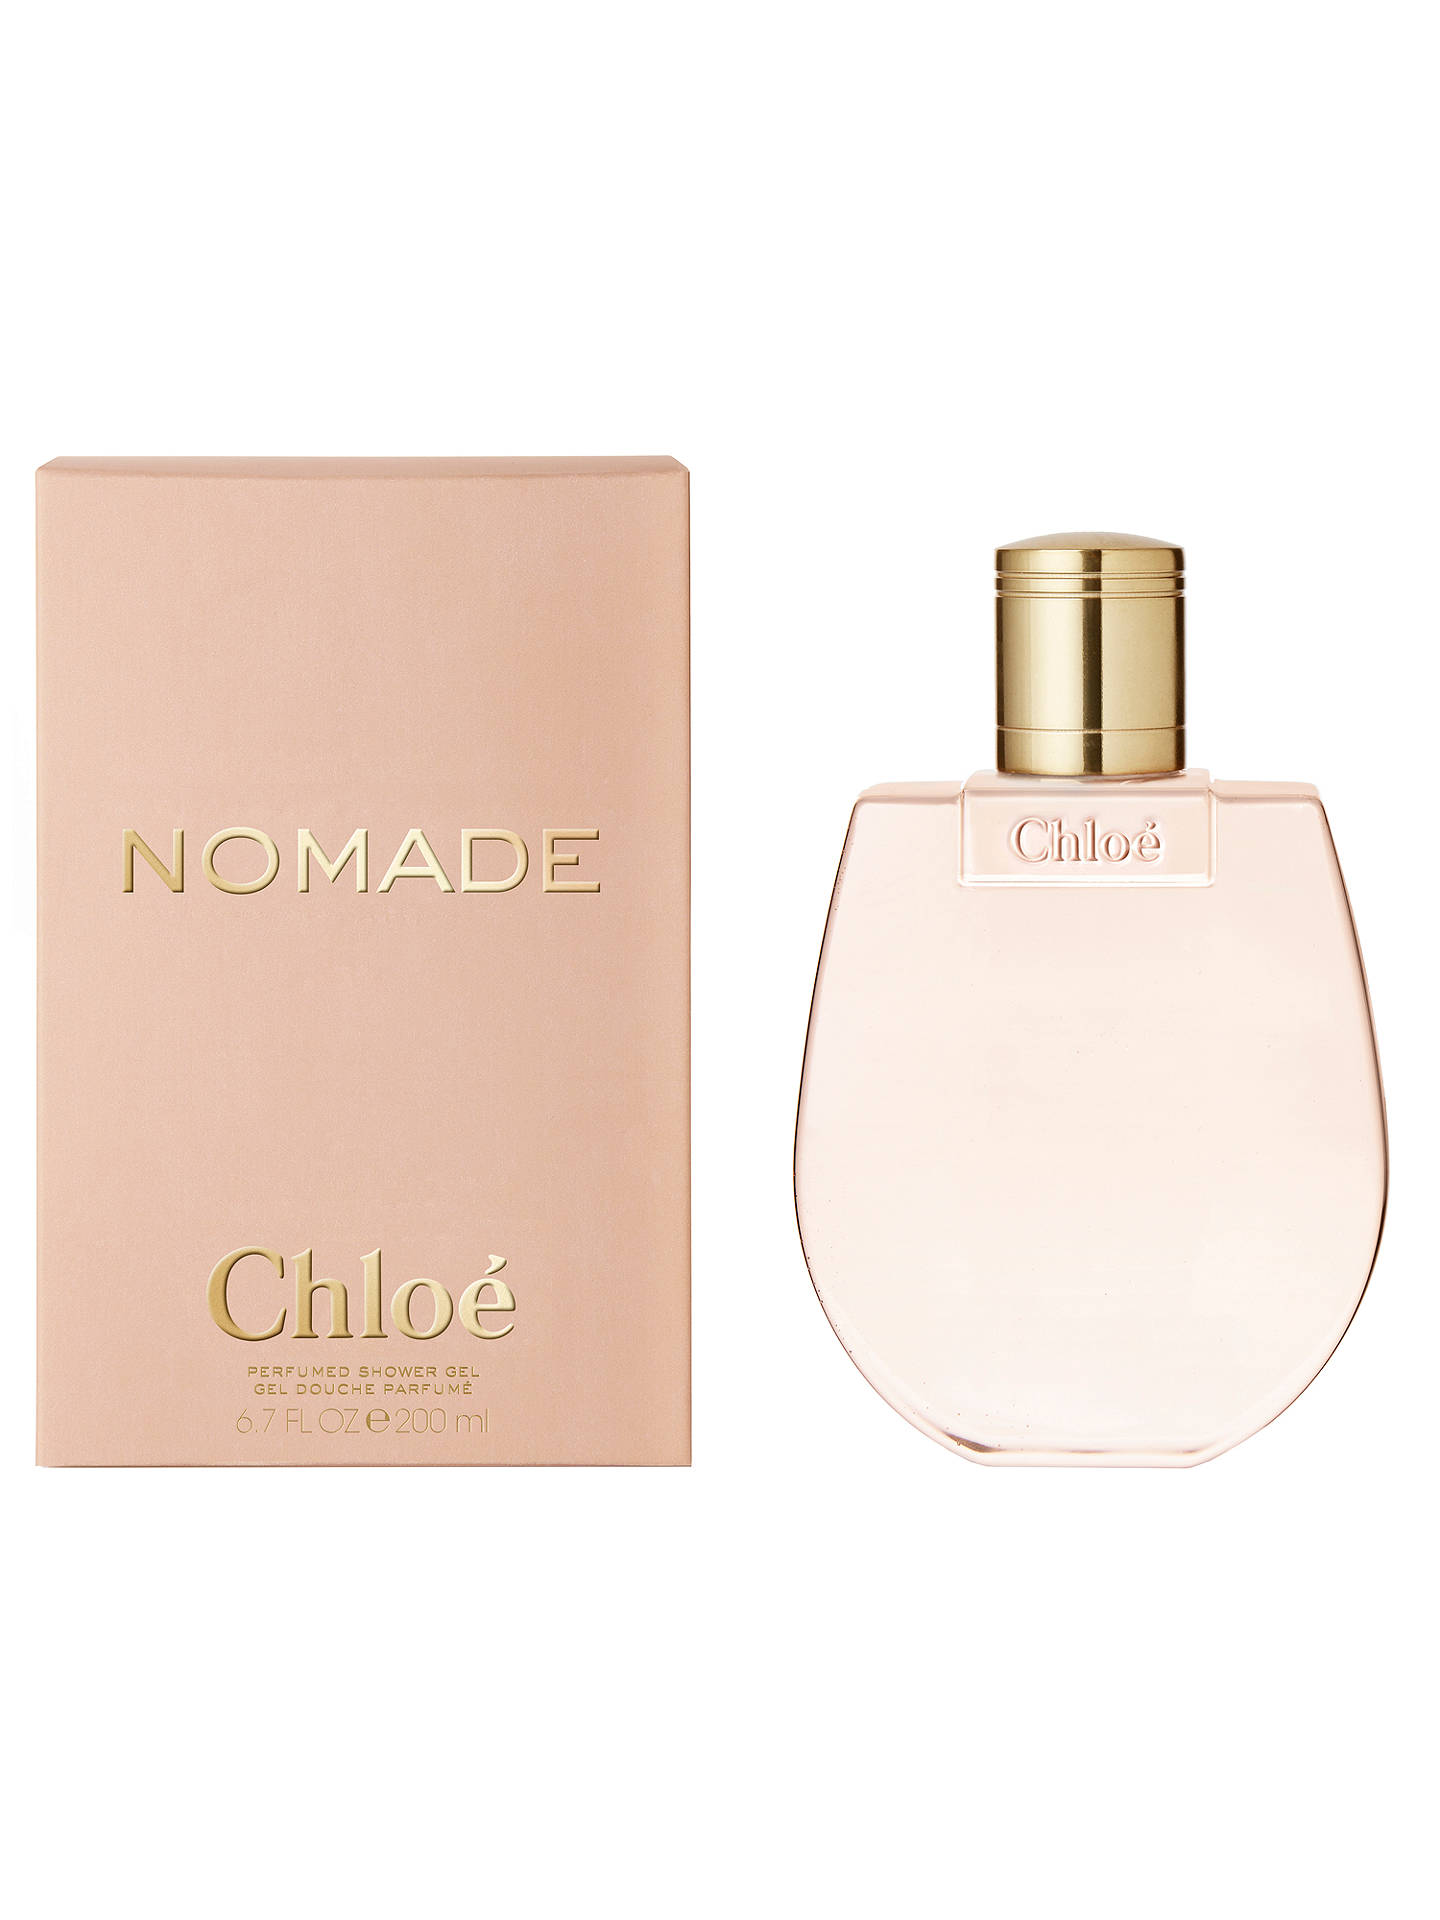 Chloé Nomade Shower Gel, 200ml at John Lewis & Partners